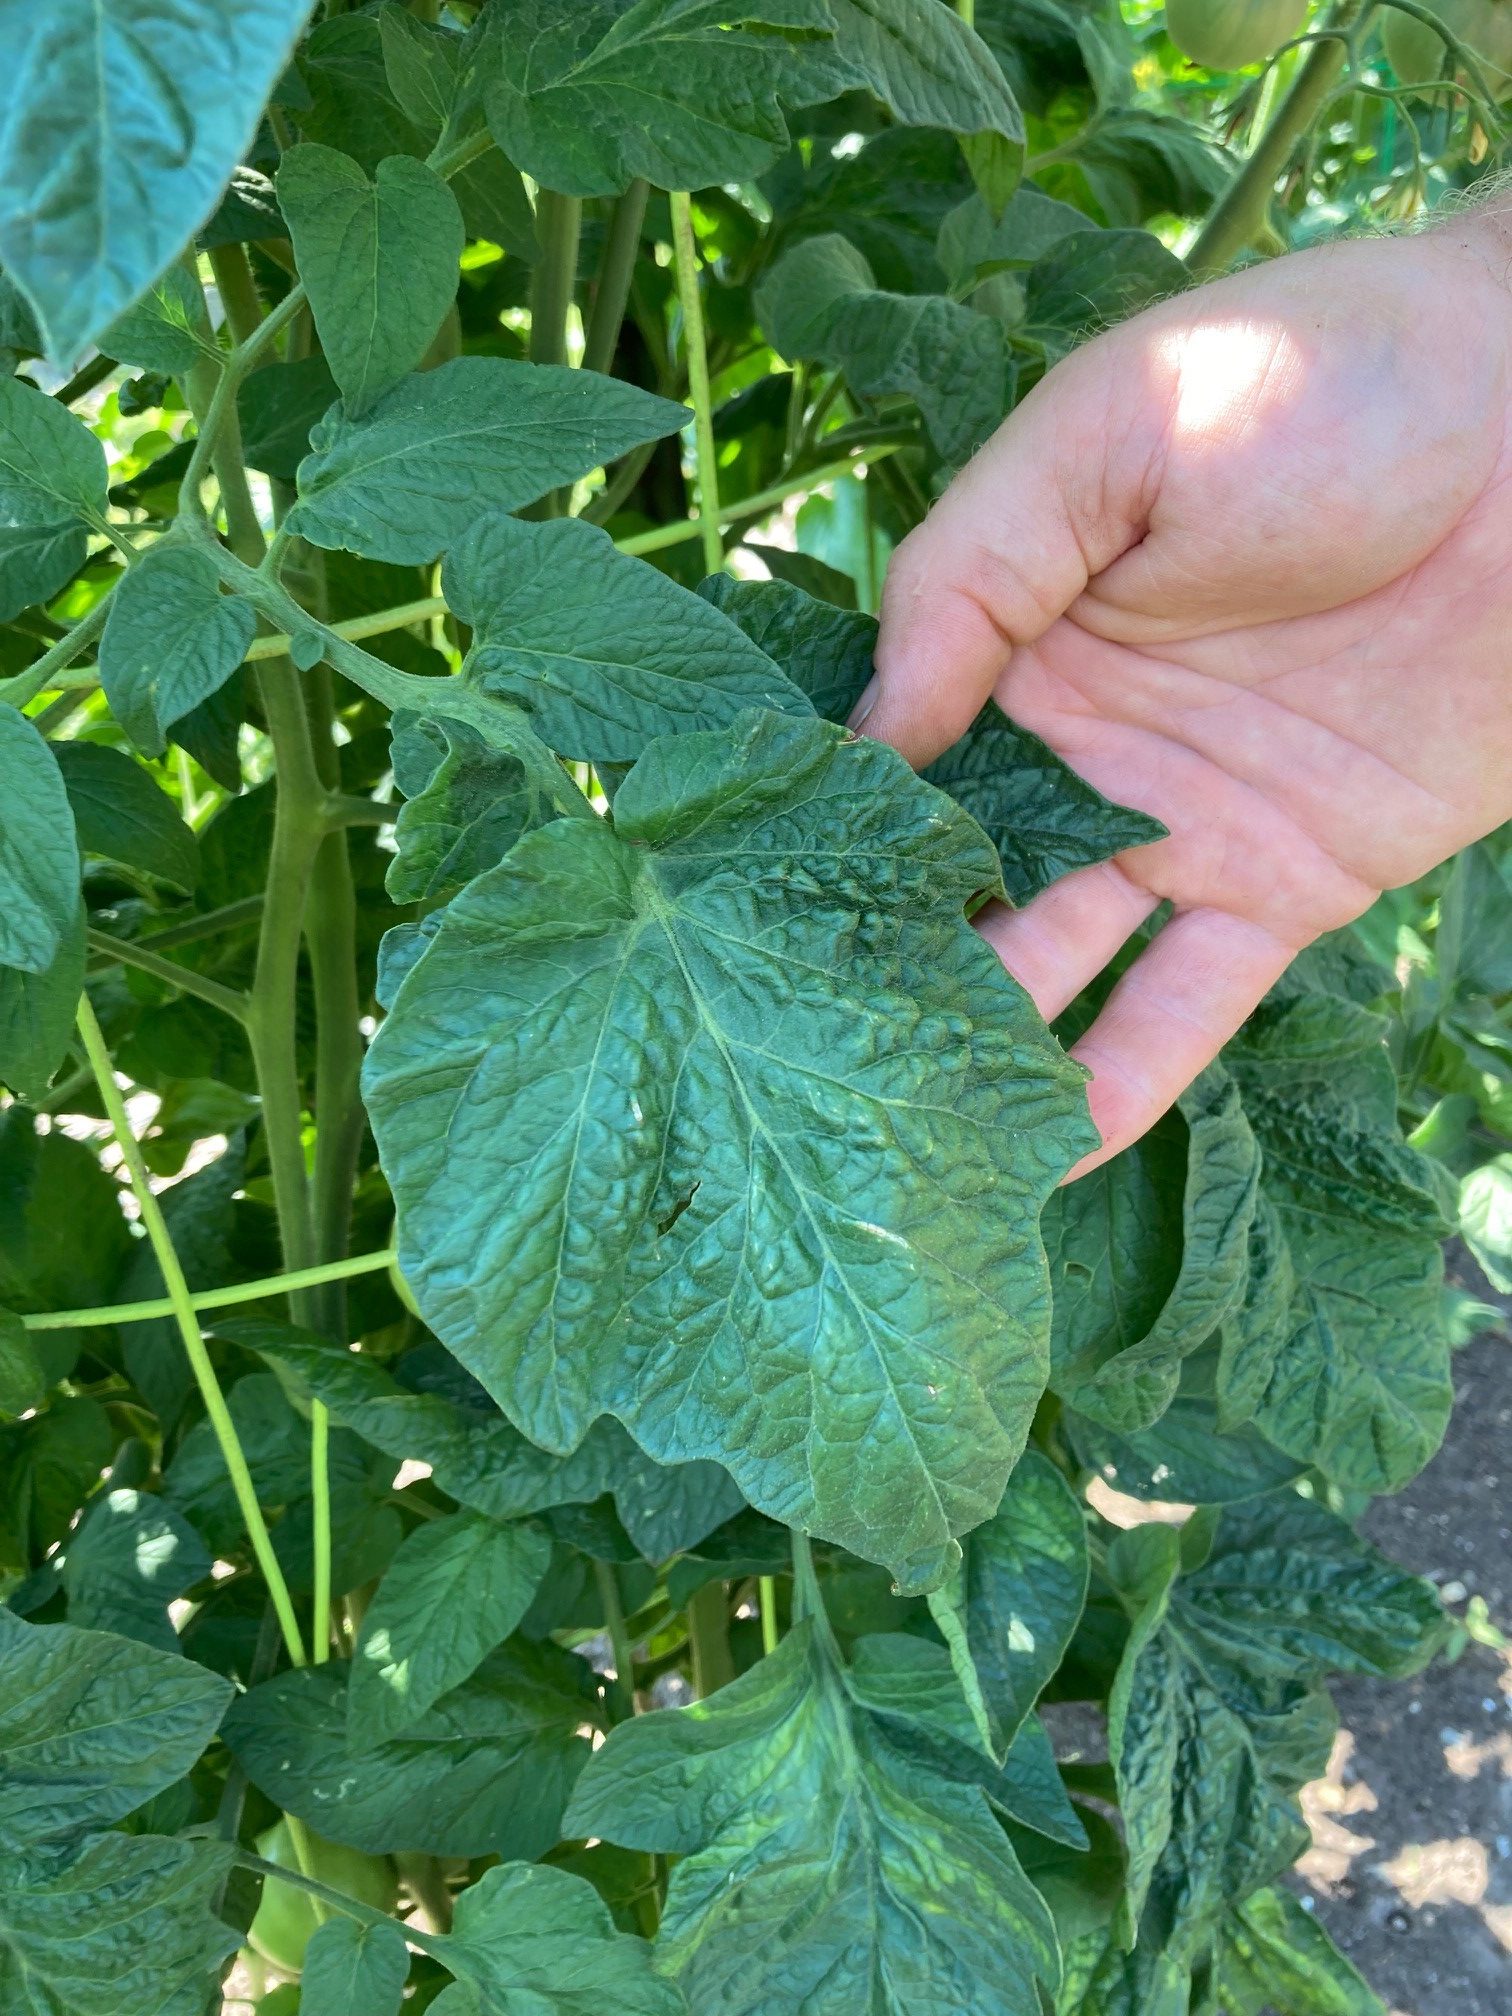 https://www.lewisginter.org/wp-content/uploads/2022/07/brandywine-tomato-leaf-looks-more-like-a-potato-e1657141489645.jpg